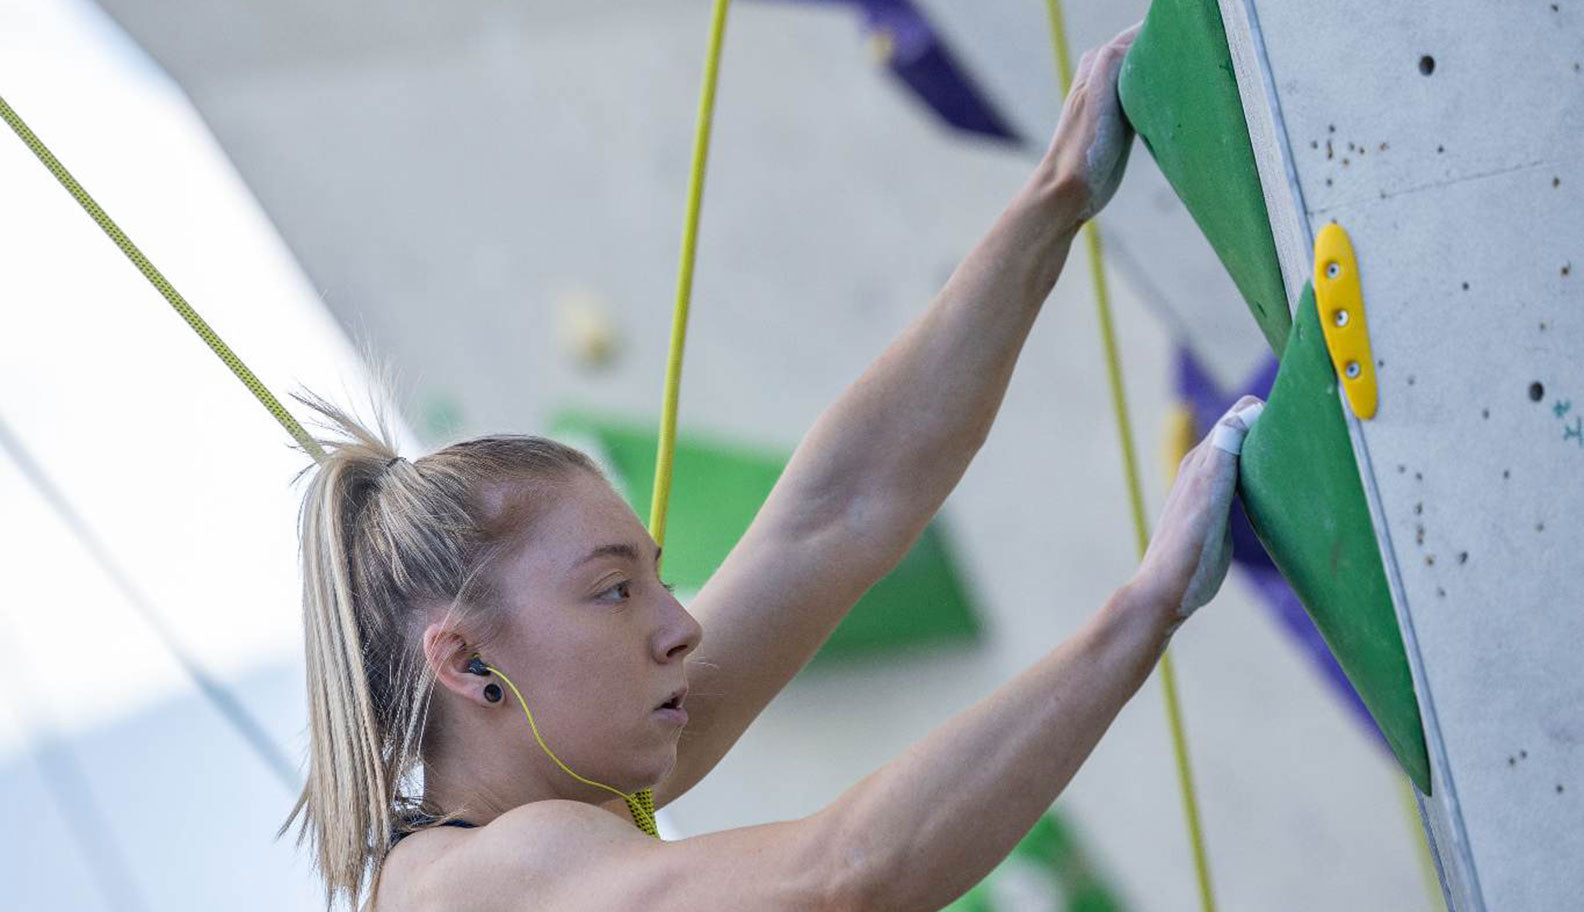 Abbie Robinson climbign in the Innsbruck World Cup